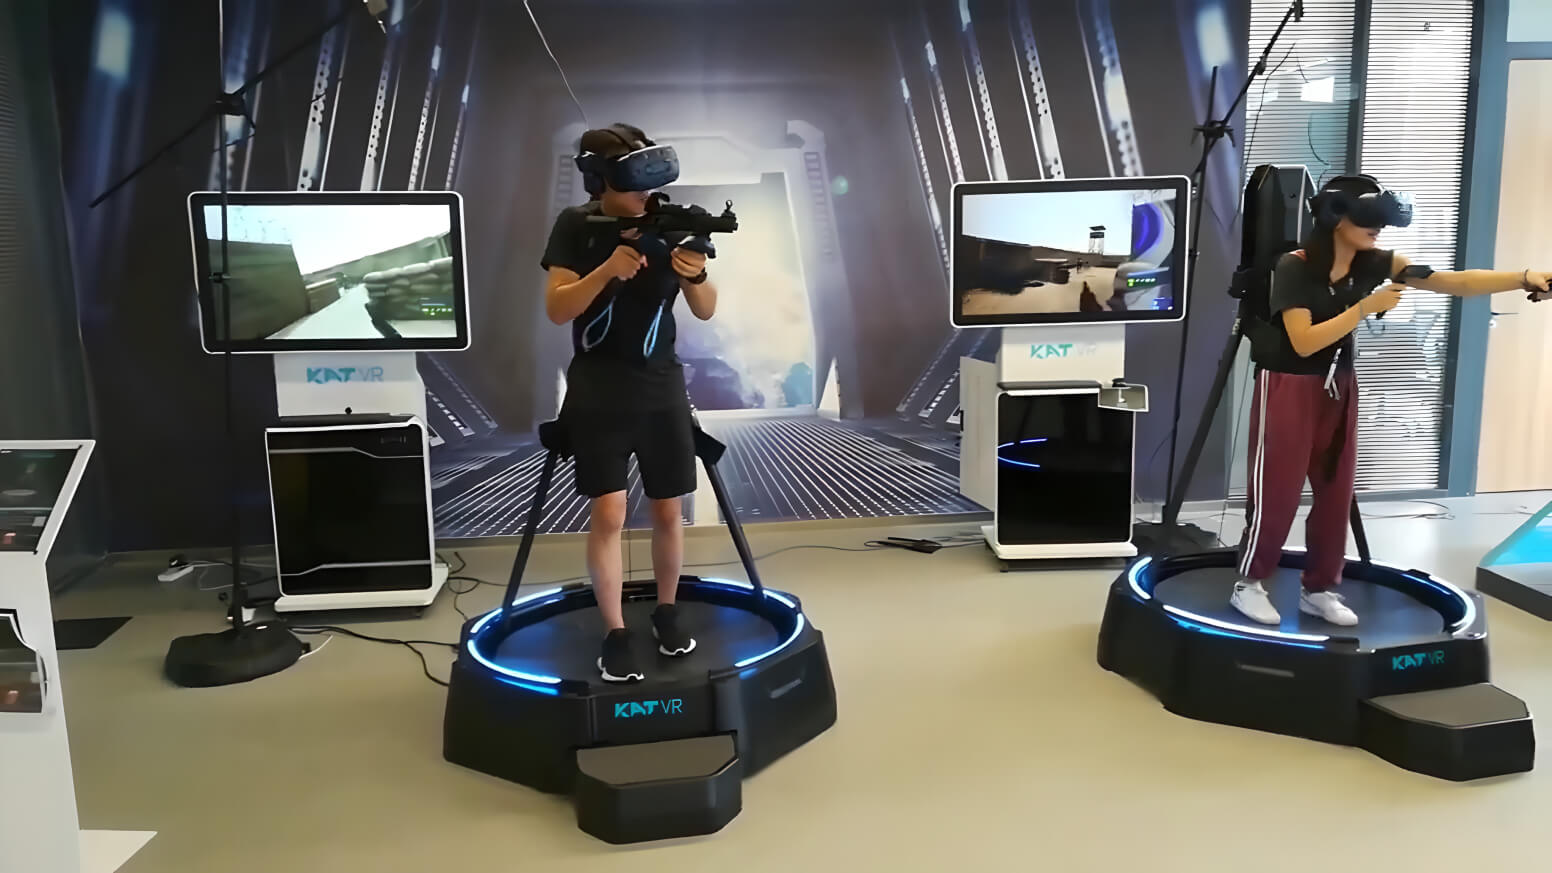 Kat vr. Беговая VR платформа kat walk Mini. Kat VR платформа для виртуальной. Virtuix Omni one VR Treadmill. VR аттракцион Stereolife s1.